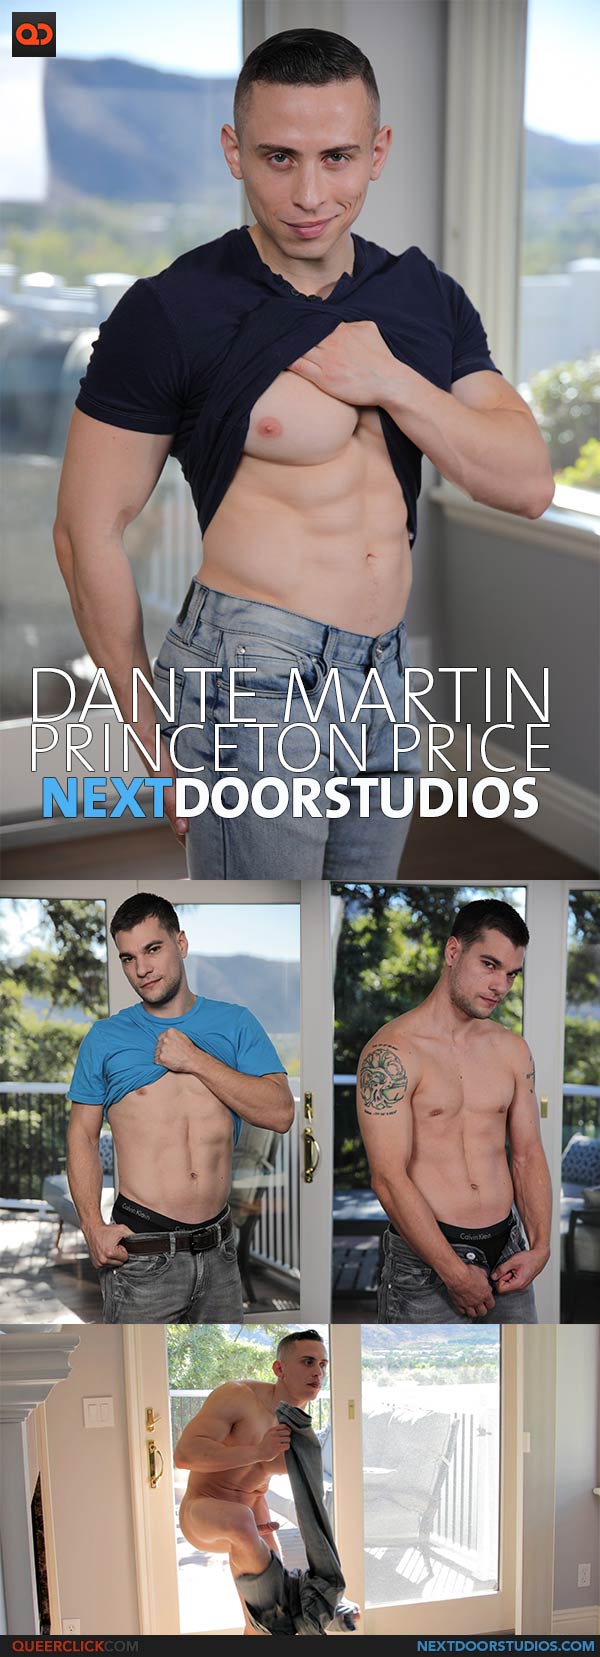 Next Door Studios:  Dante Martin and Princeton Price